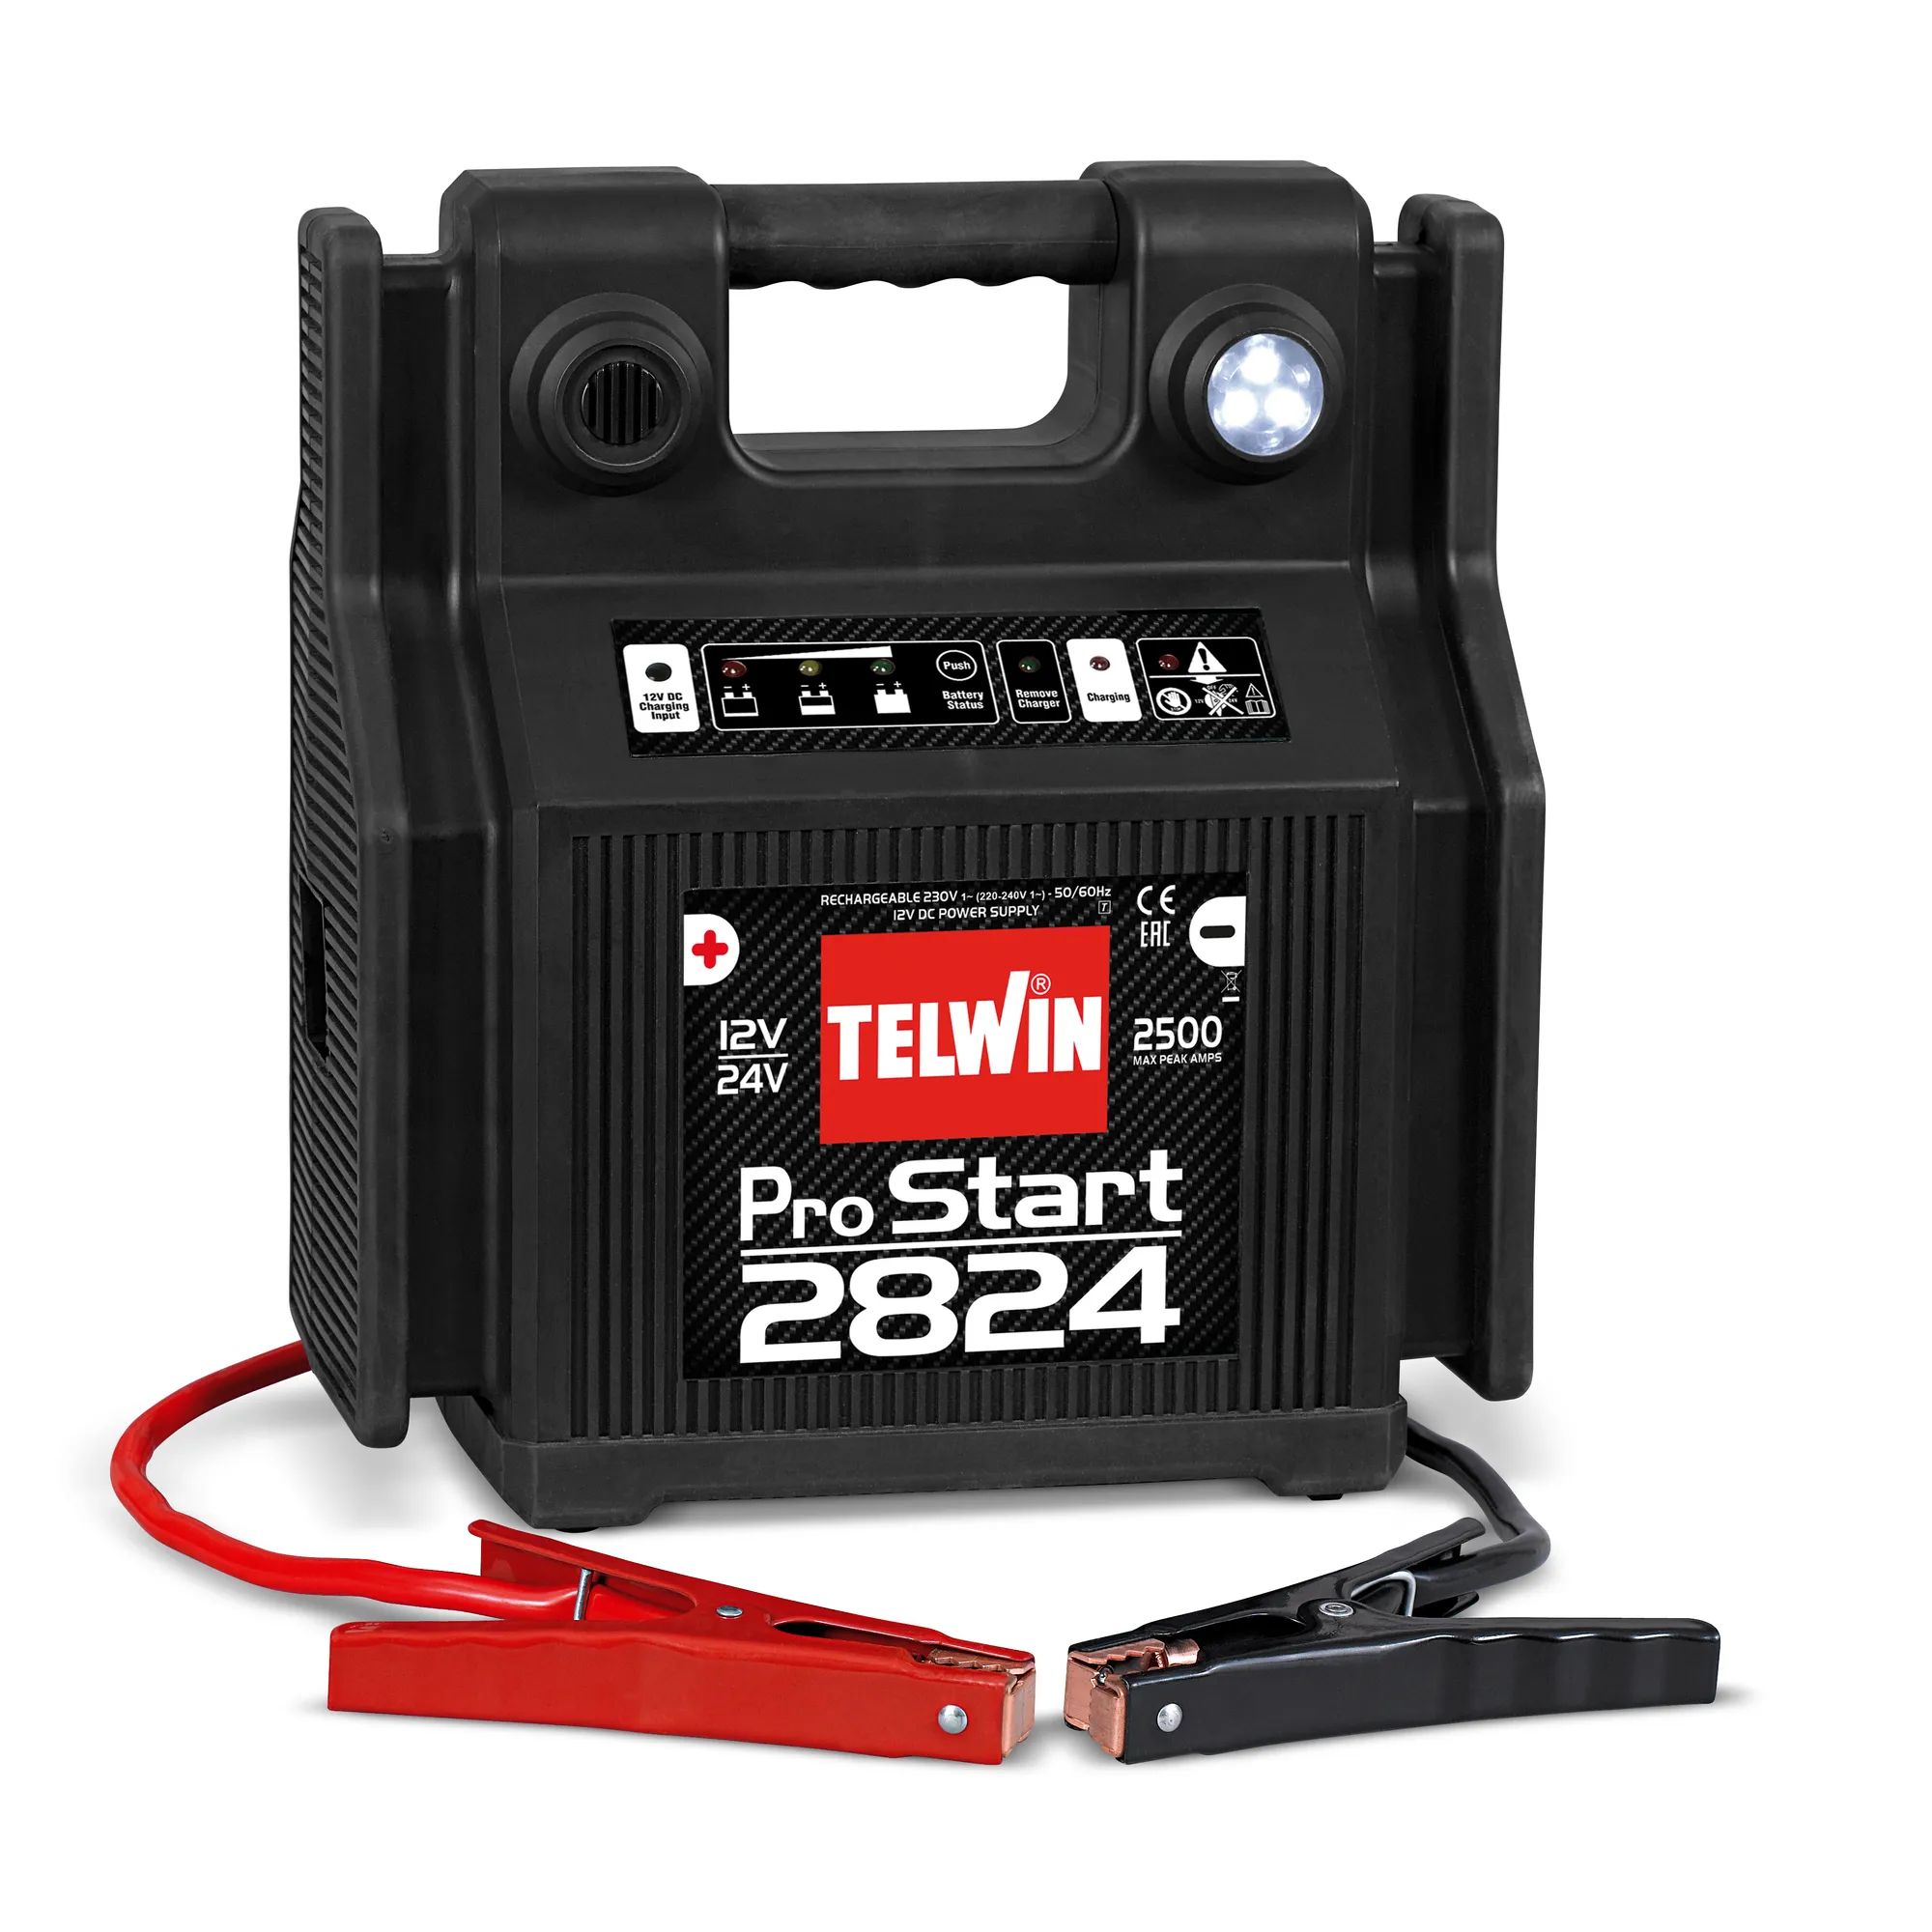 Telwin PRO START 2824 Robot de pornire / Booster 2-24V cu baterie interna, curent max. 2500A, 829517 